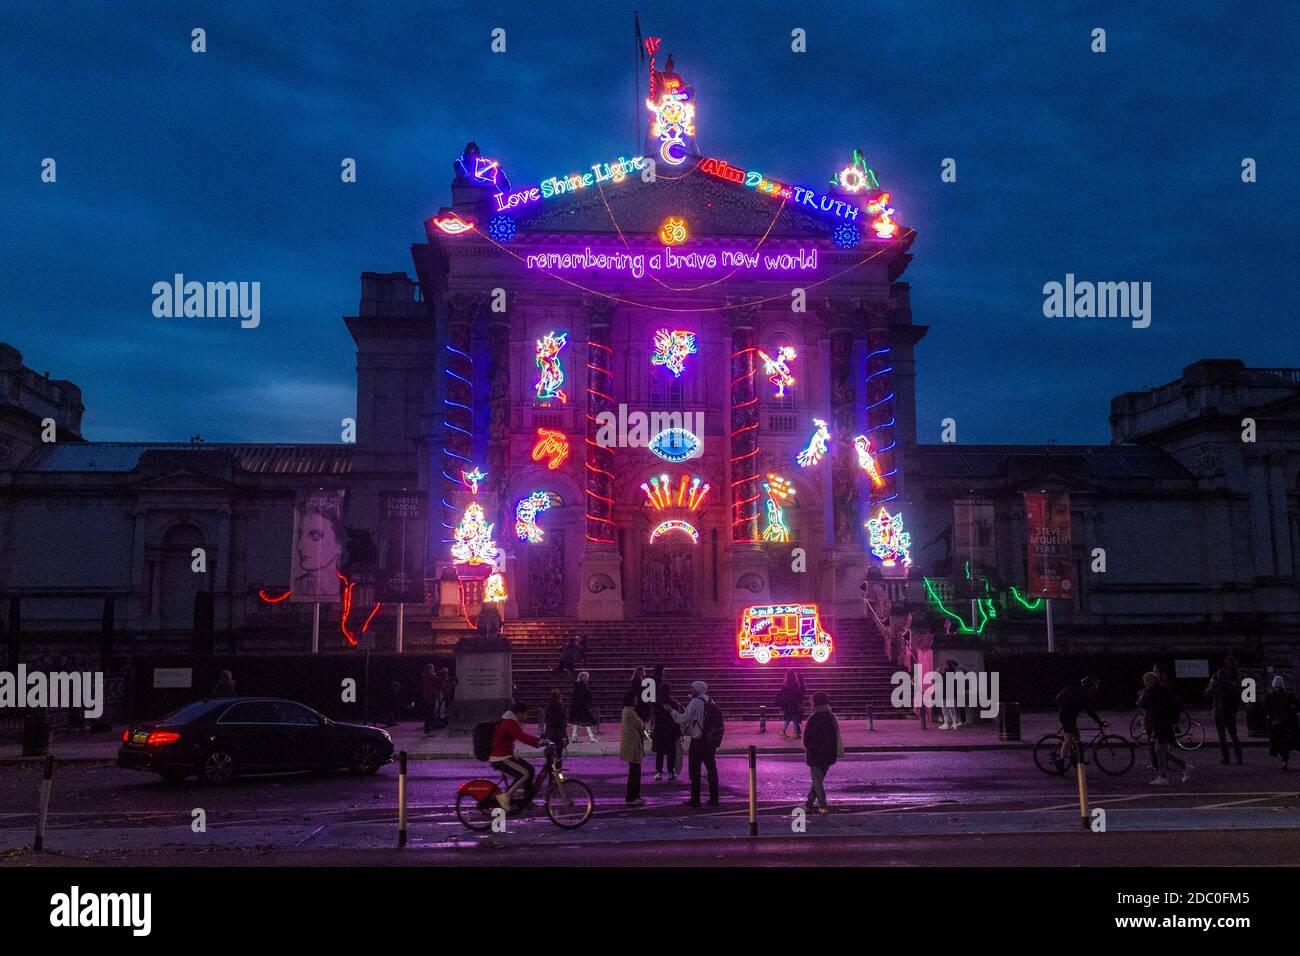 Tate Britain, installation by artist Chila Kumari Burman to celebrate the festival of Diwali in London, Westminster, London, UK Stock Photo